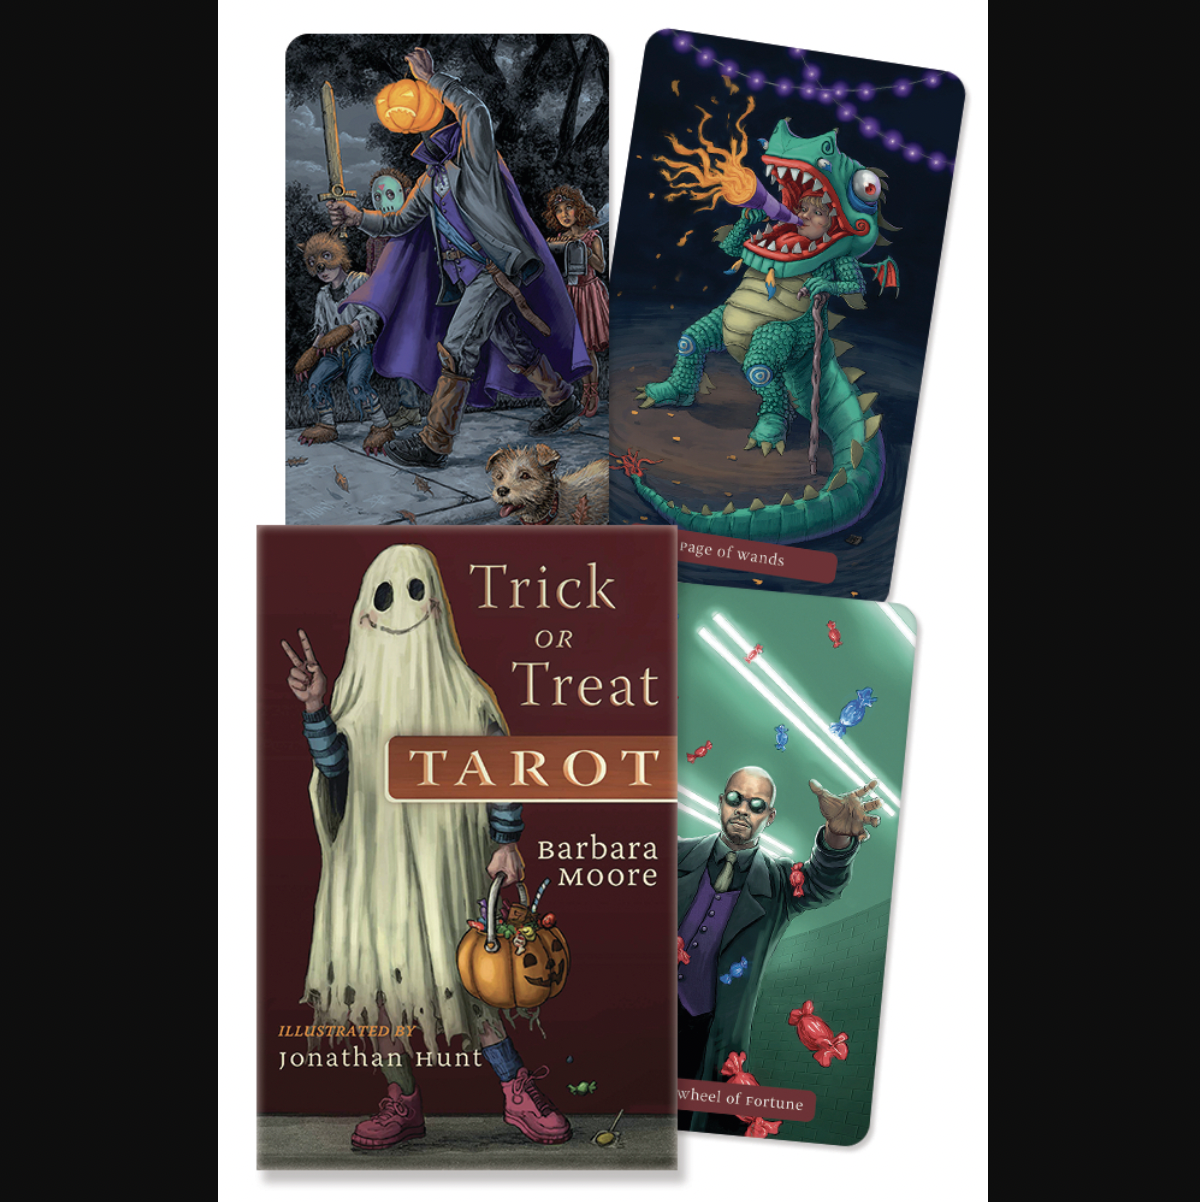 Trick or Treat Tarot by Barbara Moore and Jonathan Hunt